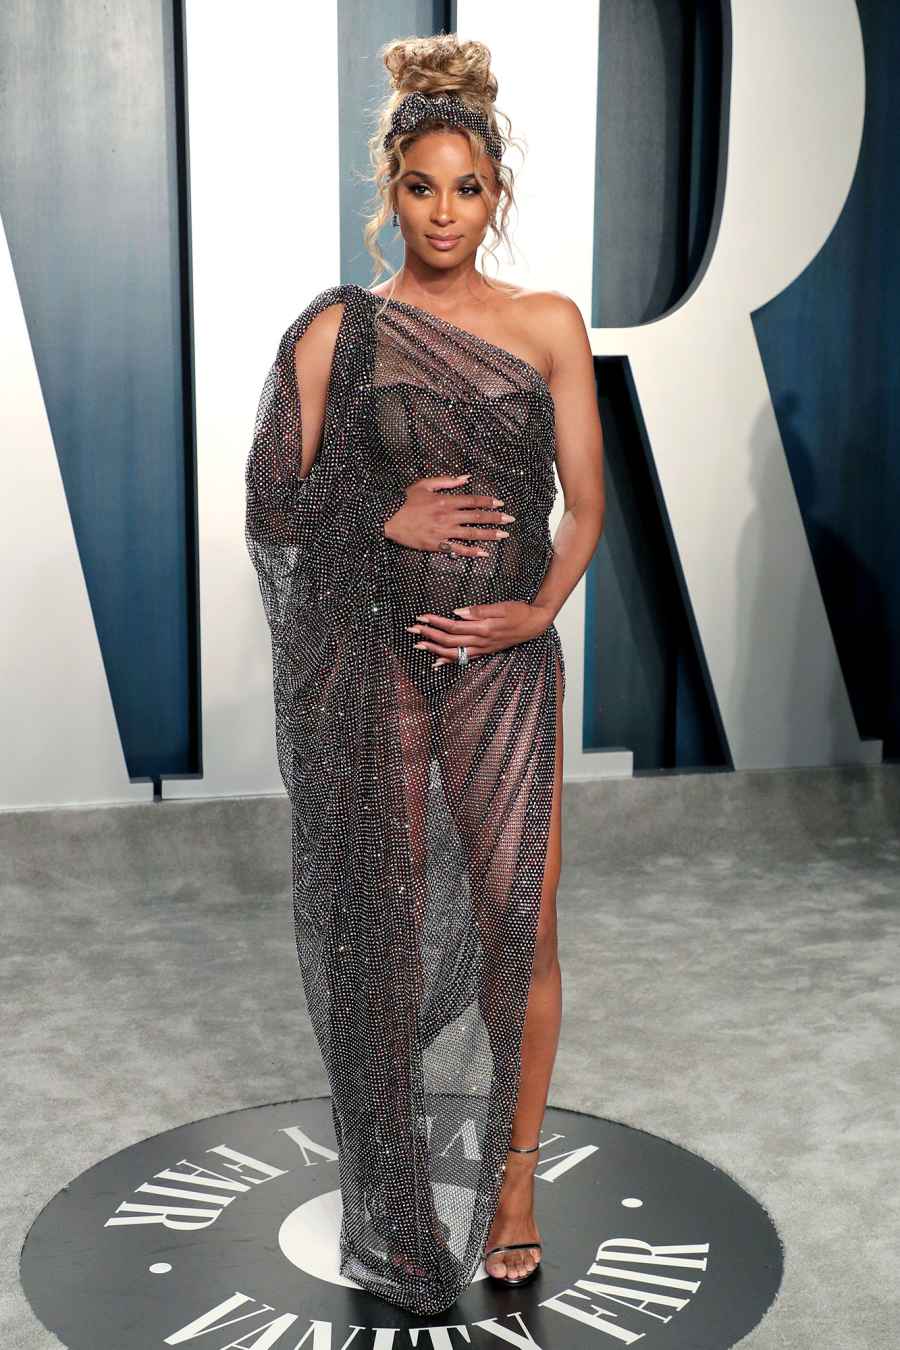 Ciara Vanity Fair Oscar Party Wearing Ralph and Russo Sheer Dress Oscars 2020 Oscars Baby Bumps